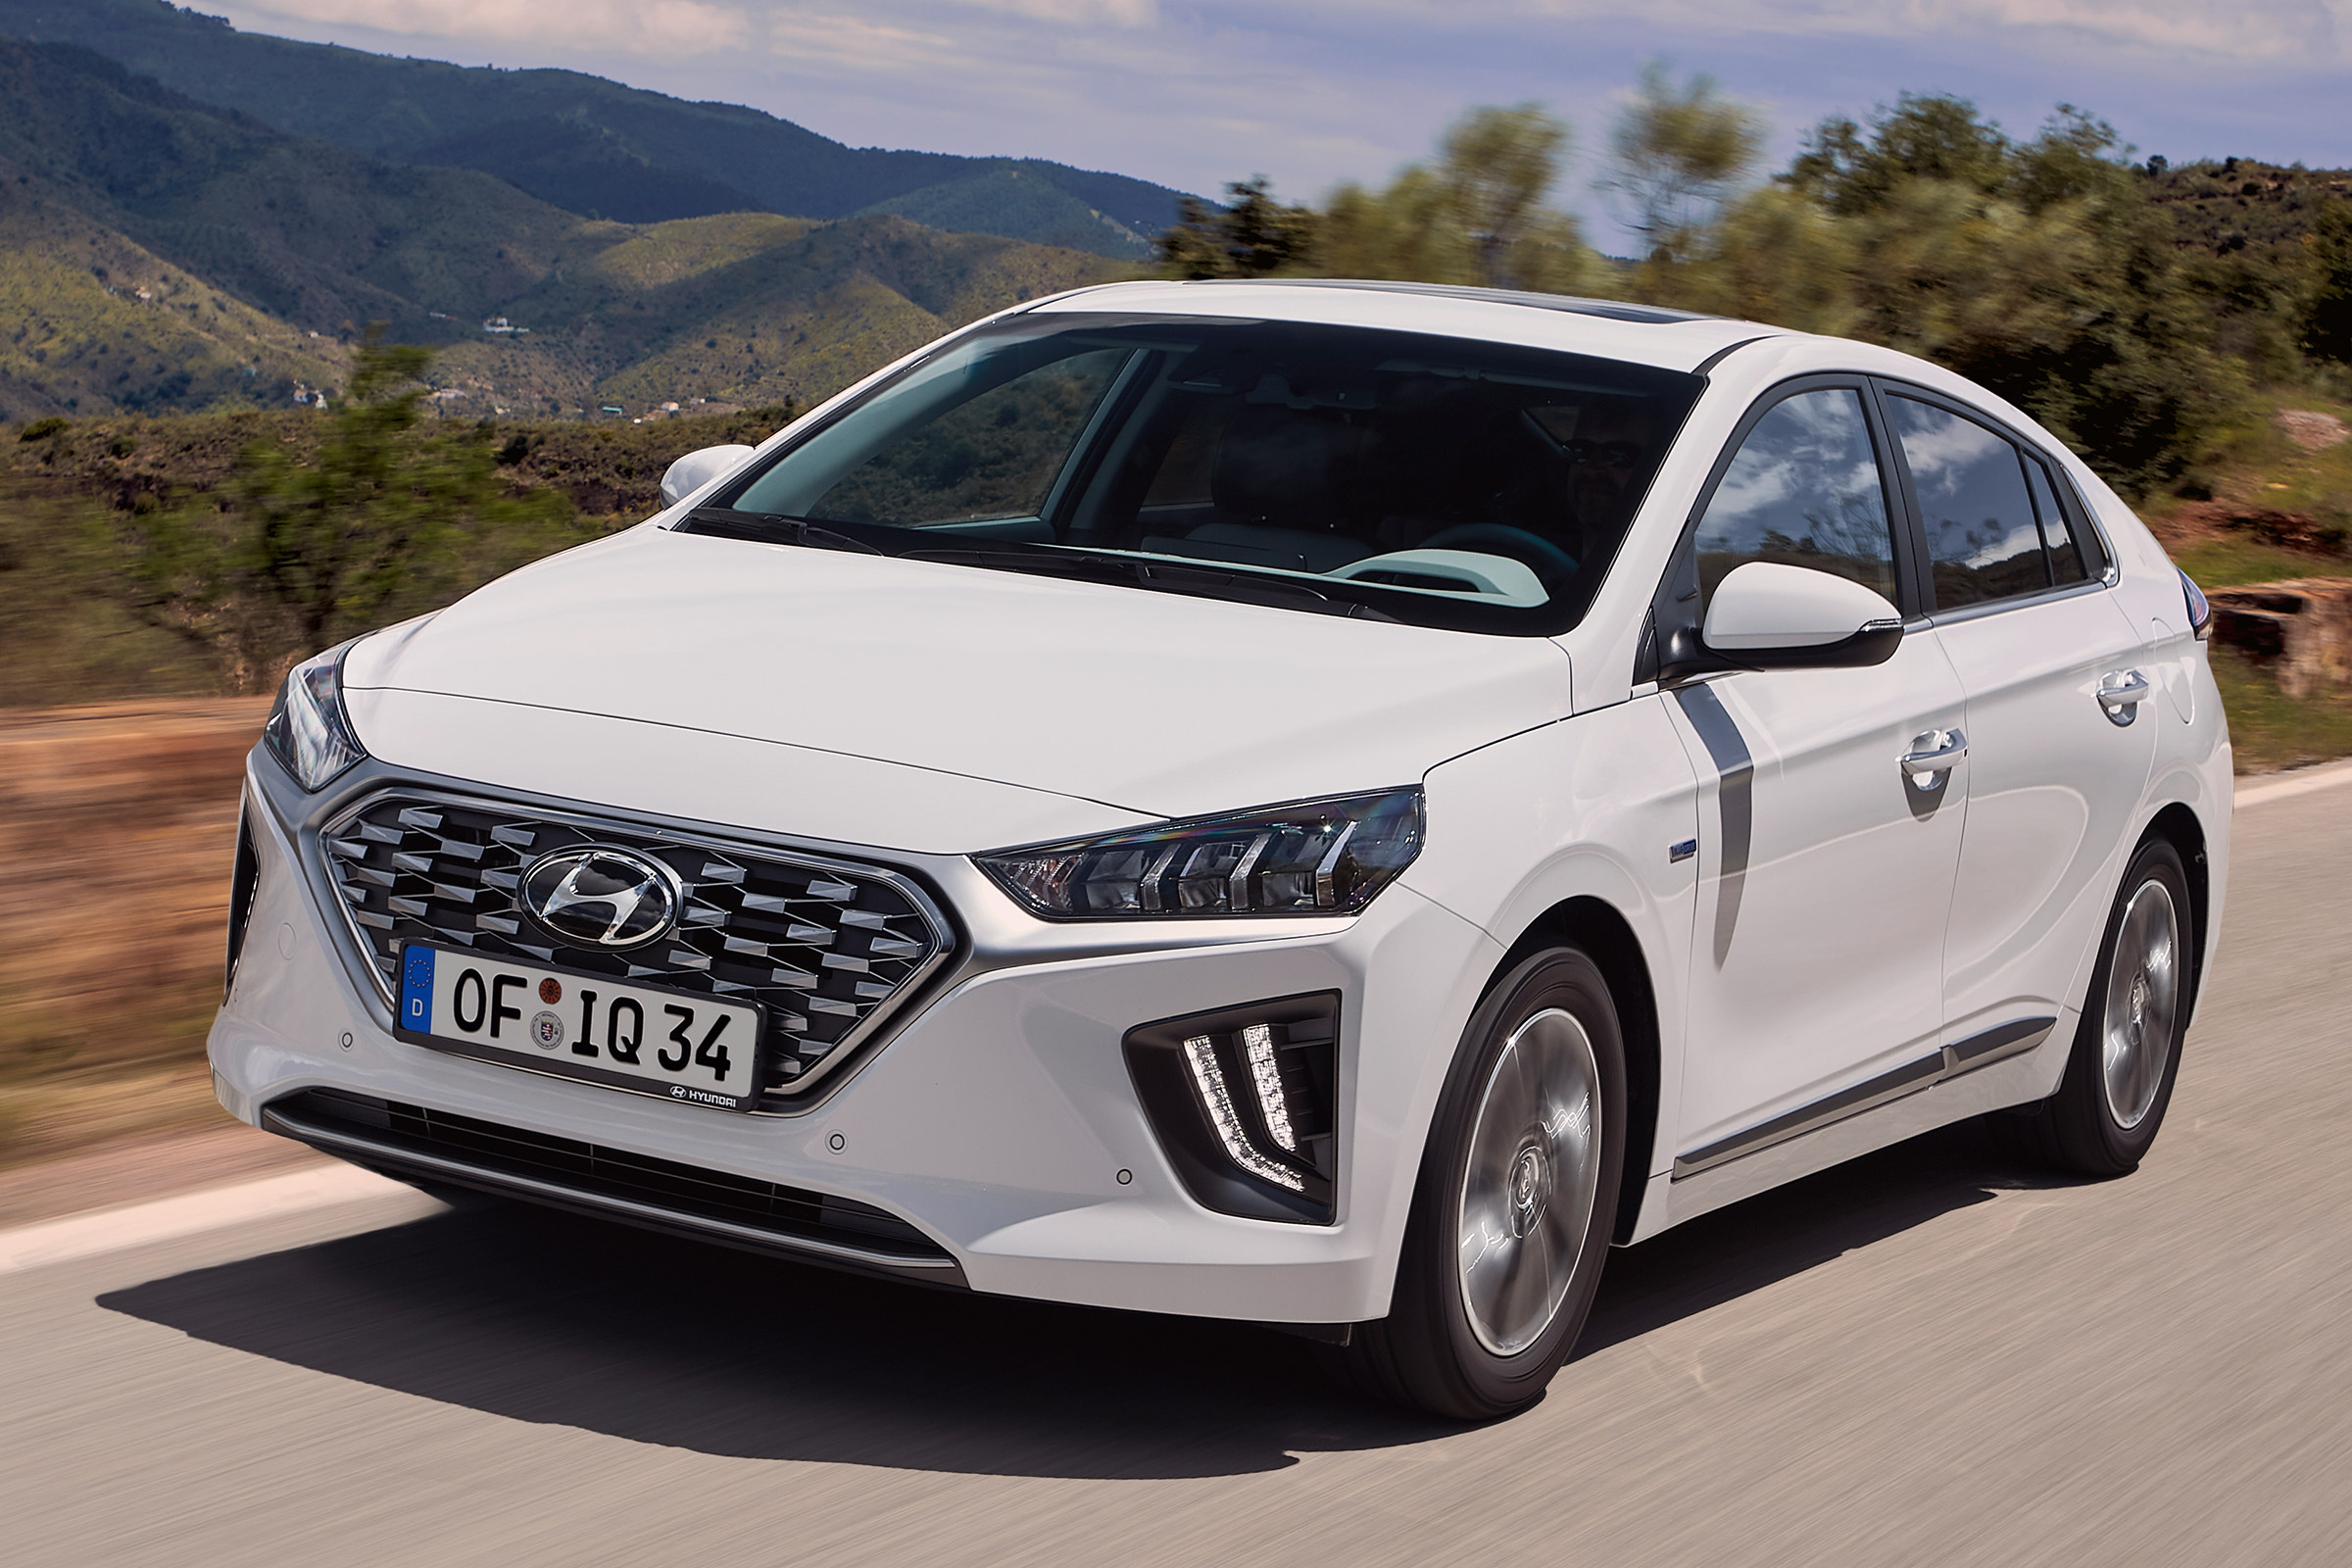 New Hyundai Ioniq Hybrid 2019 review | Auto Express